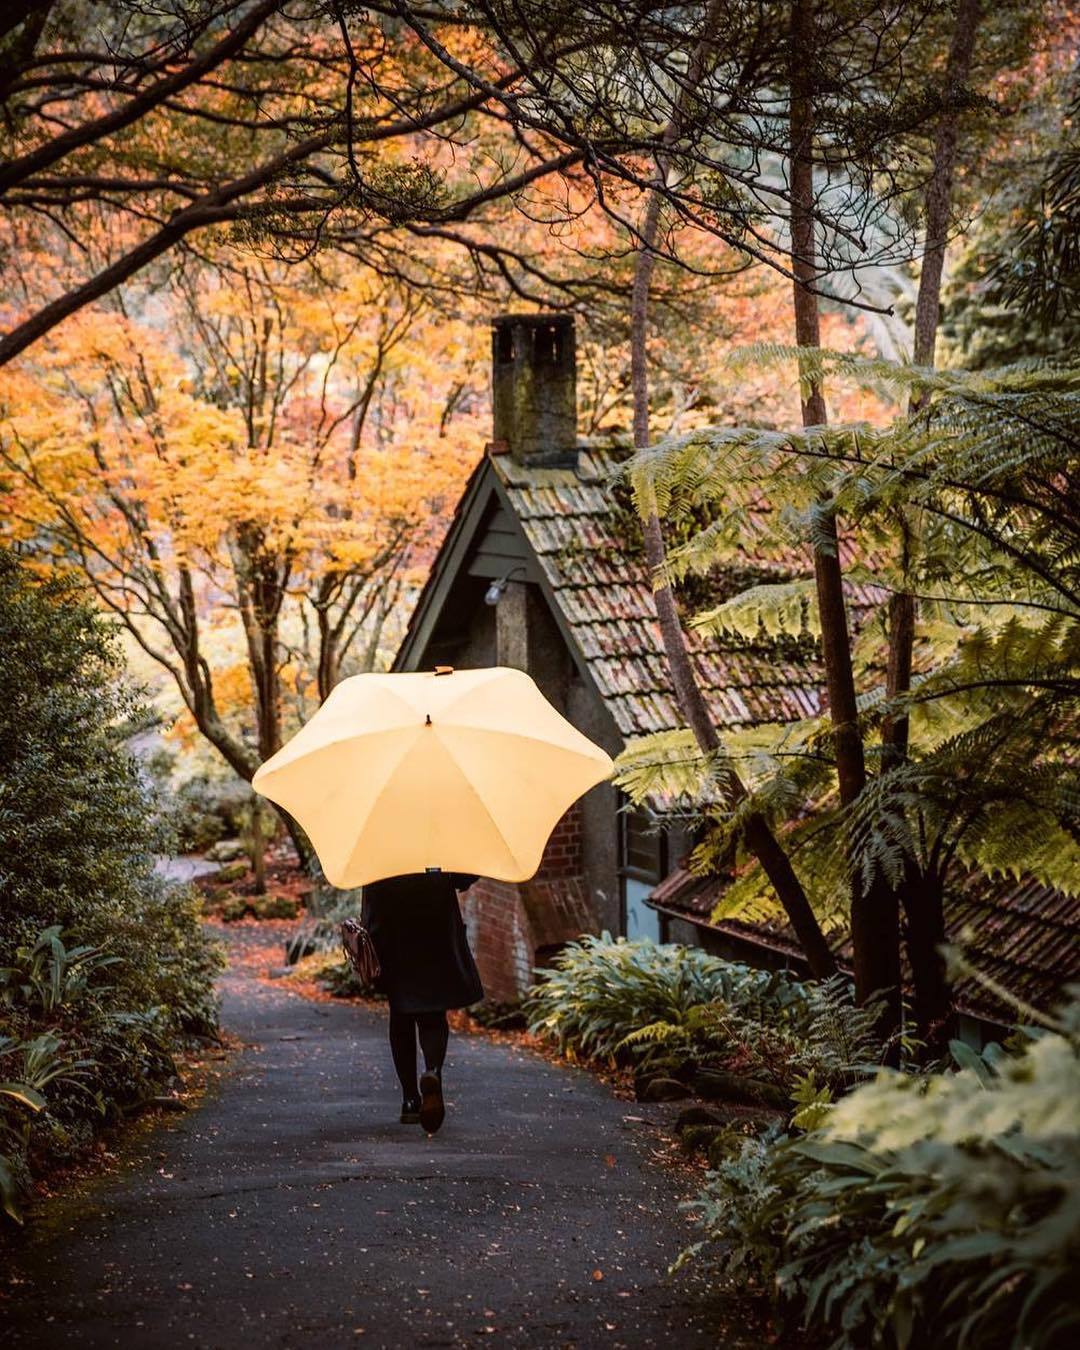 Blunt esernyő BLUNT™ XS Metro FOREST GREEN esernyő